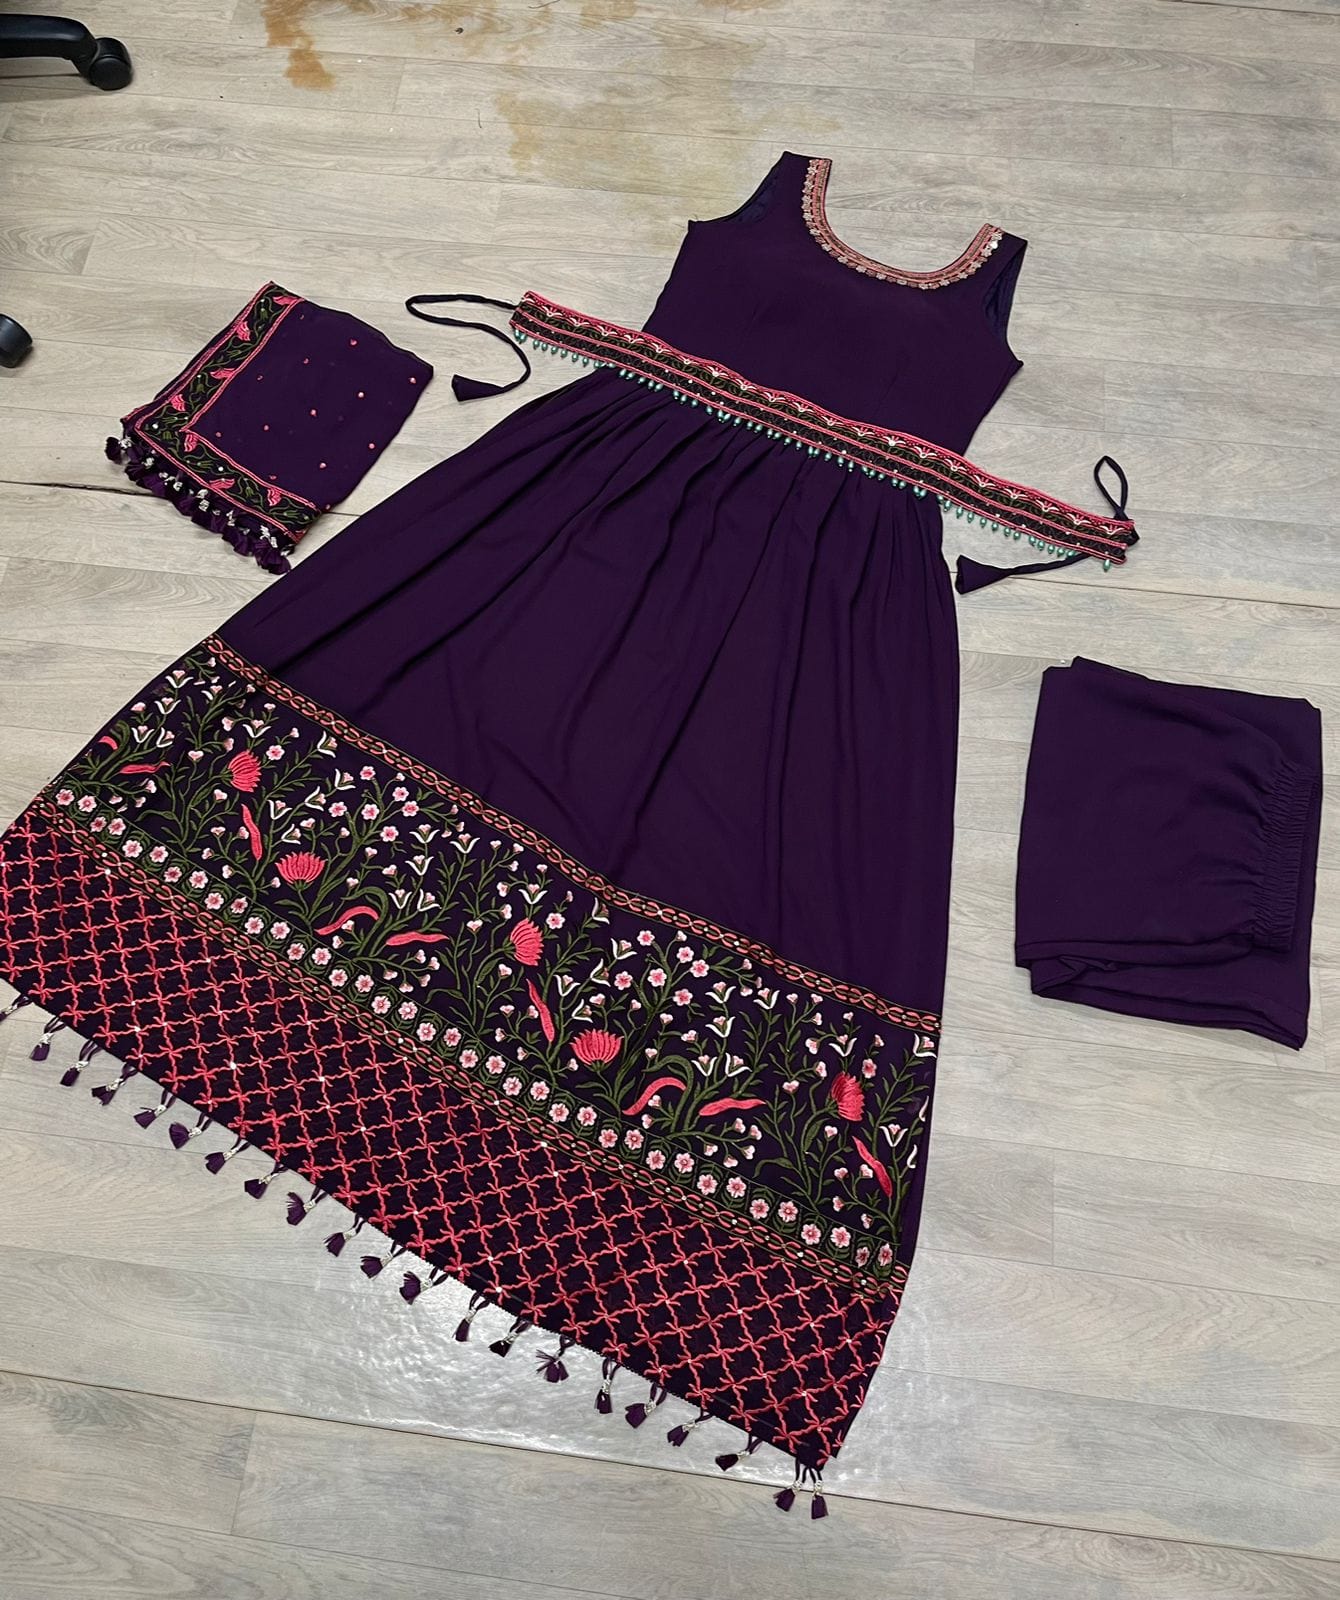 MM-195 Anarkali Dress Exquisite Designer Wine Anarkali Suit Set with Colorful Threadwork - Fully Stitched